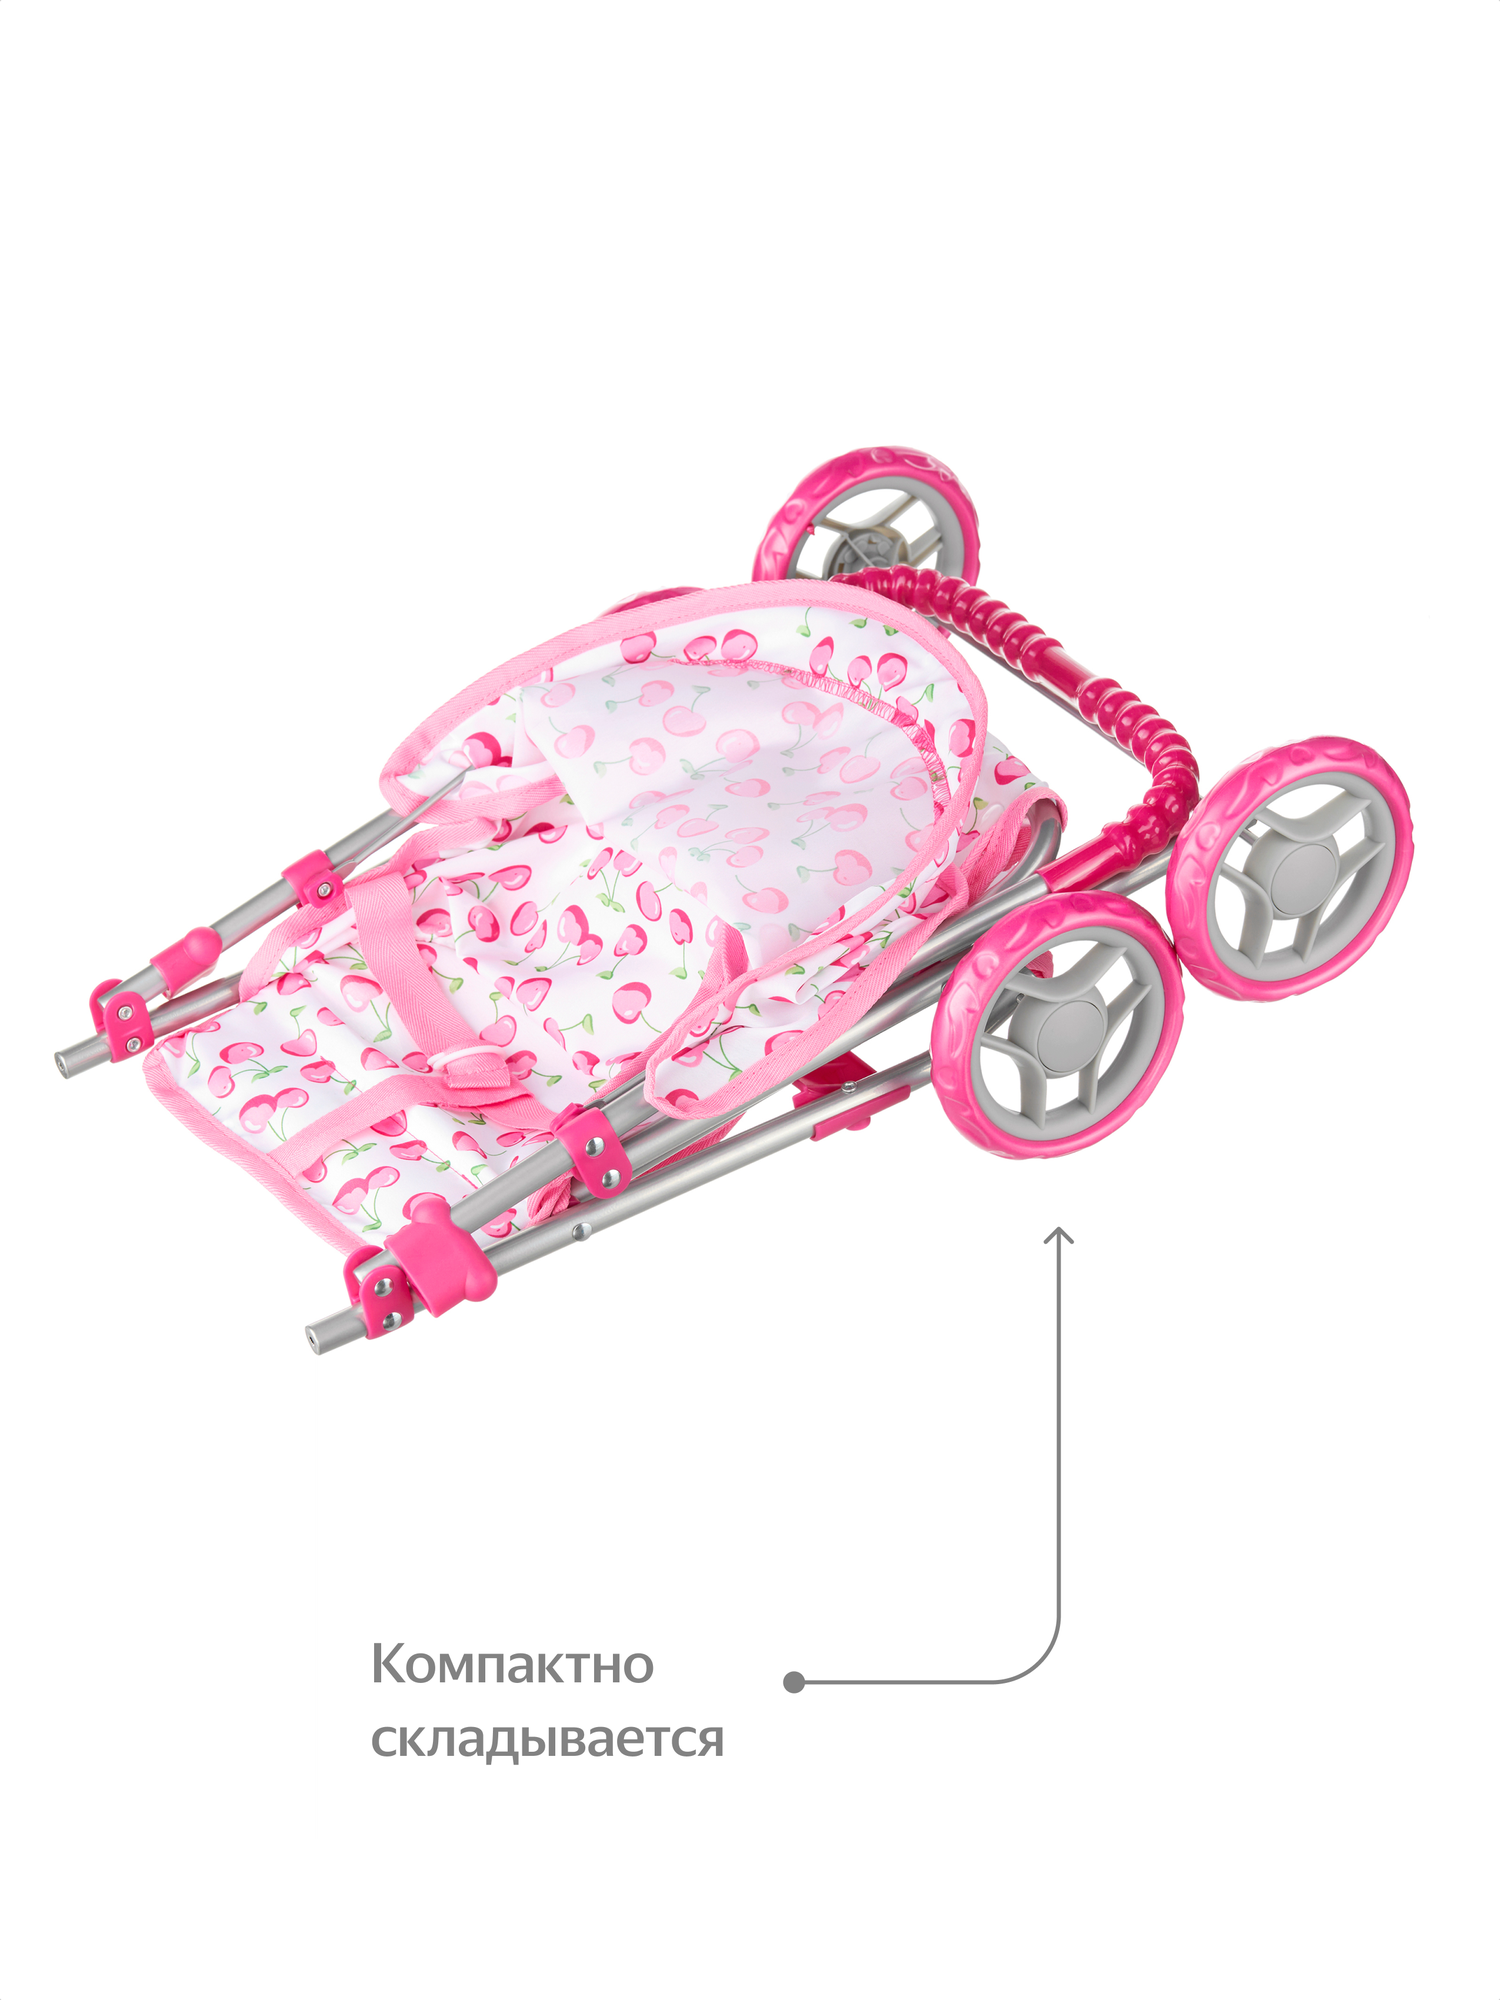 Прогулочная коляска Melobo / Melogo 9304M розовый/вишни